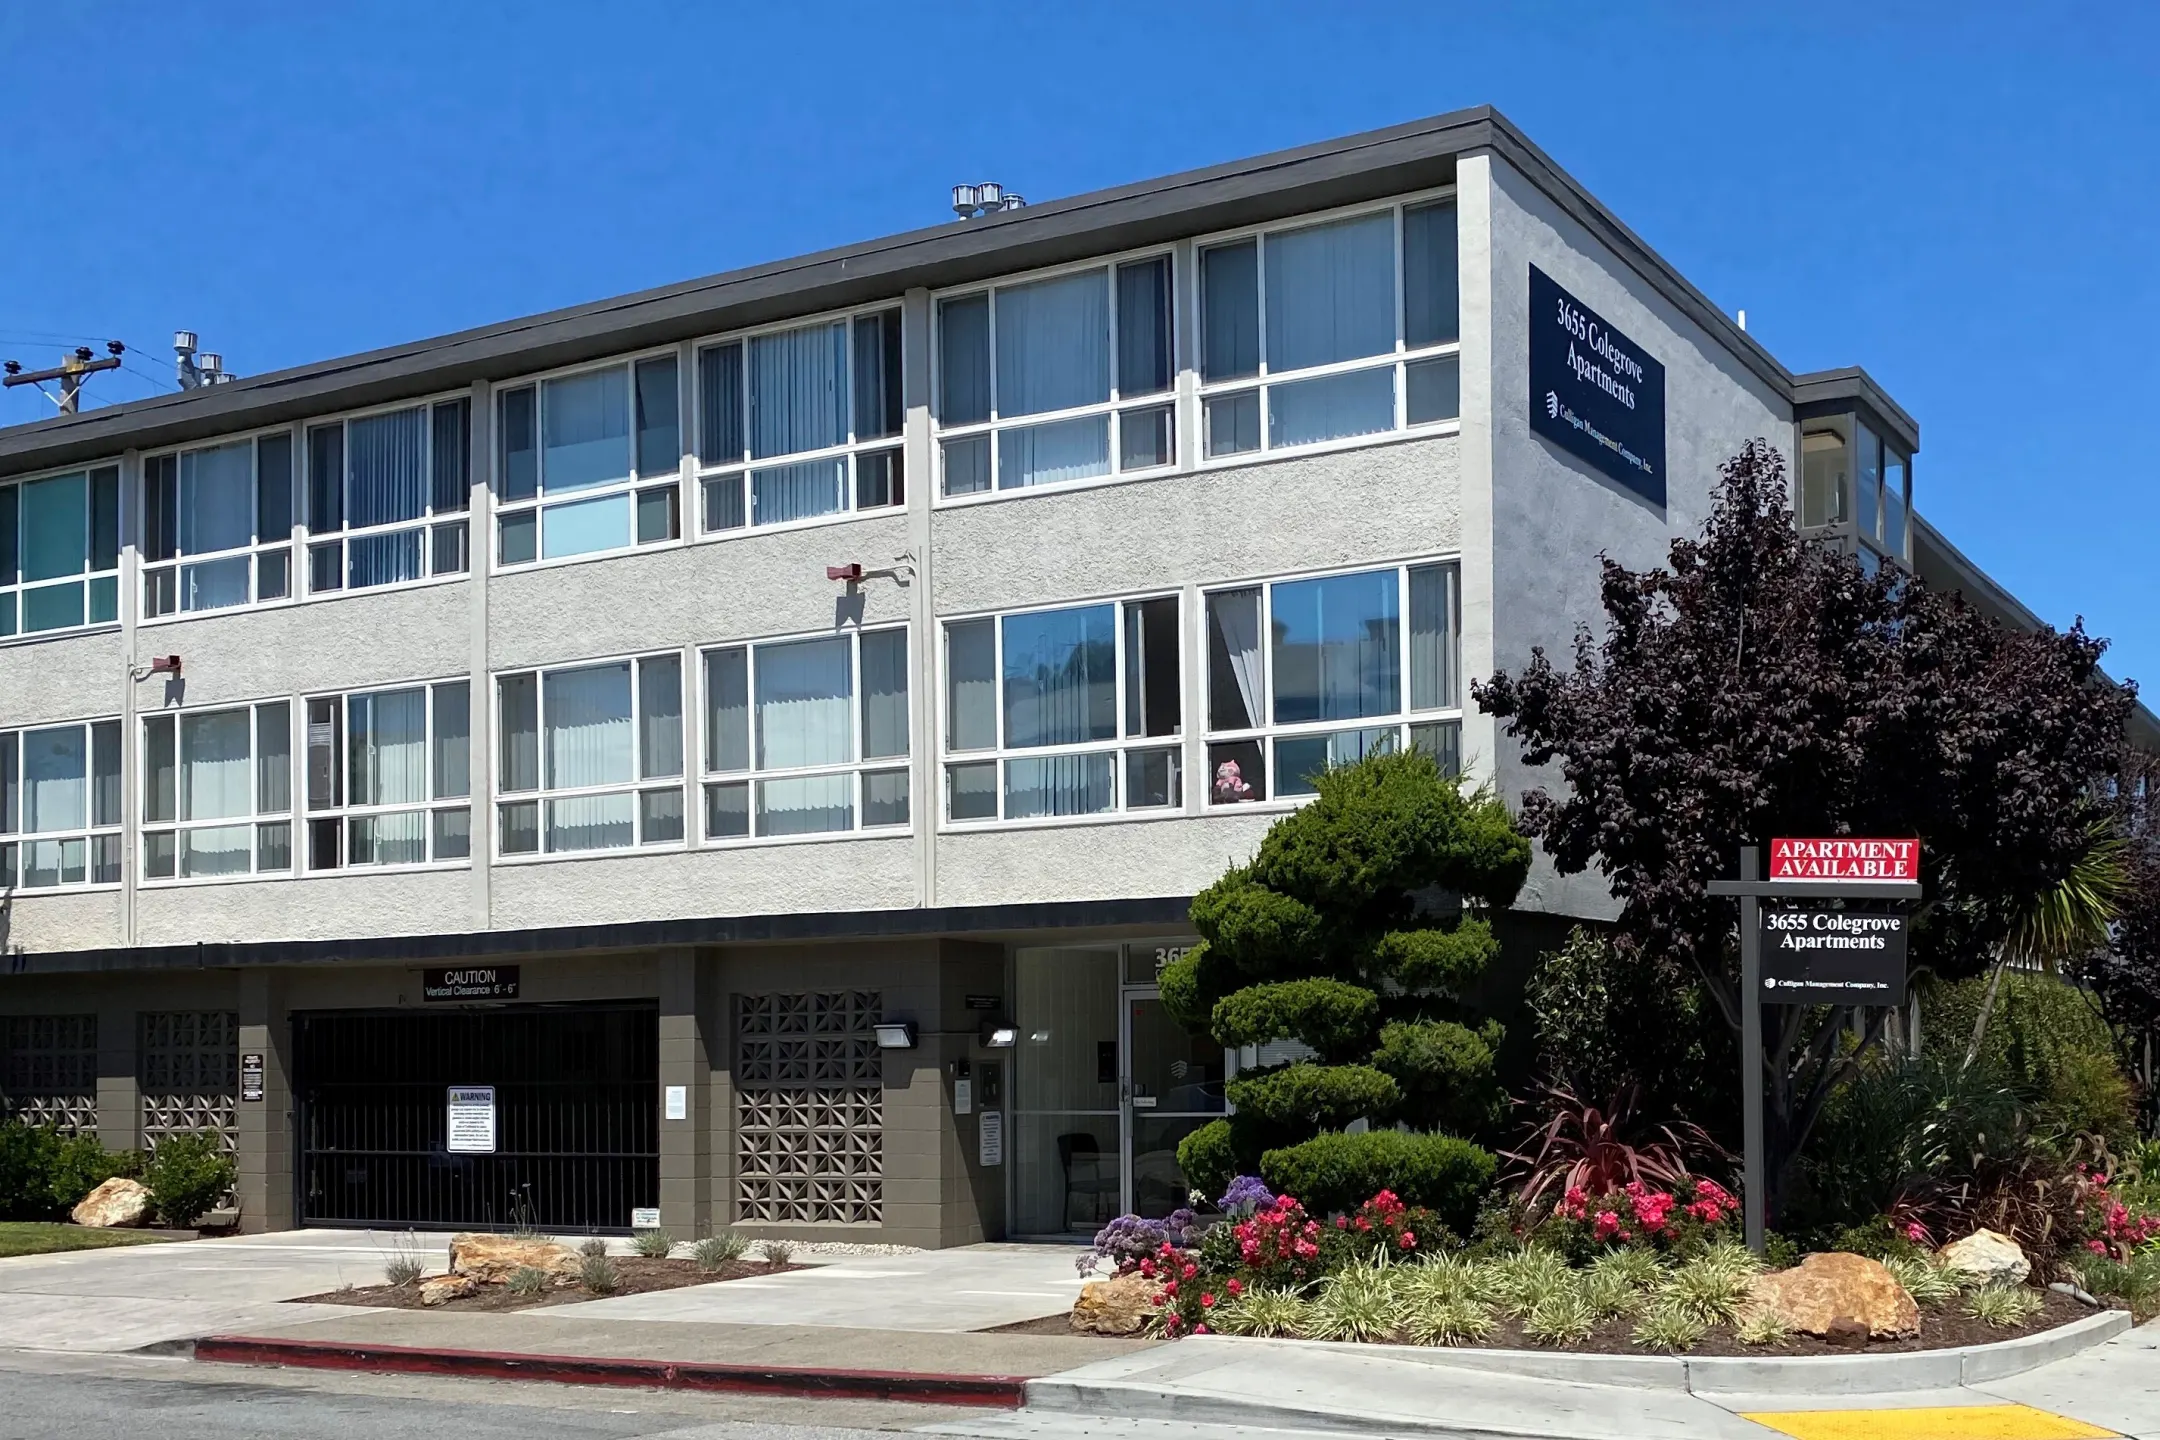 Building - 3655 Colegrove Apartments - San Mateo, CA